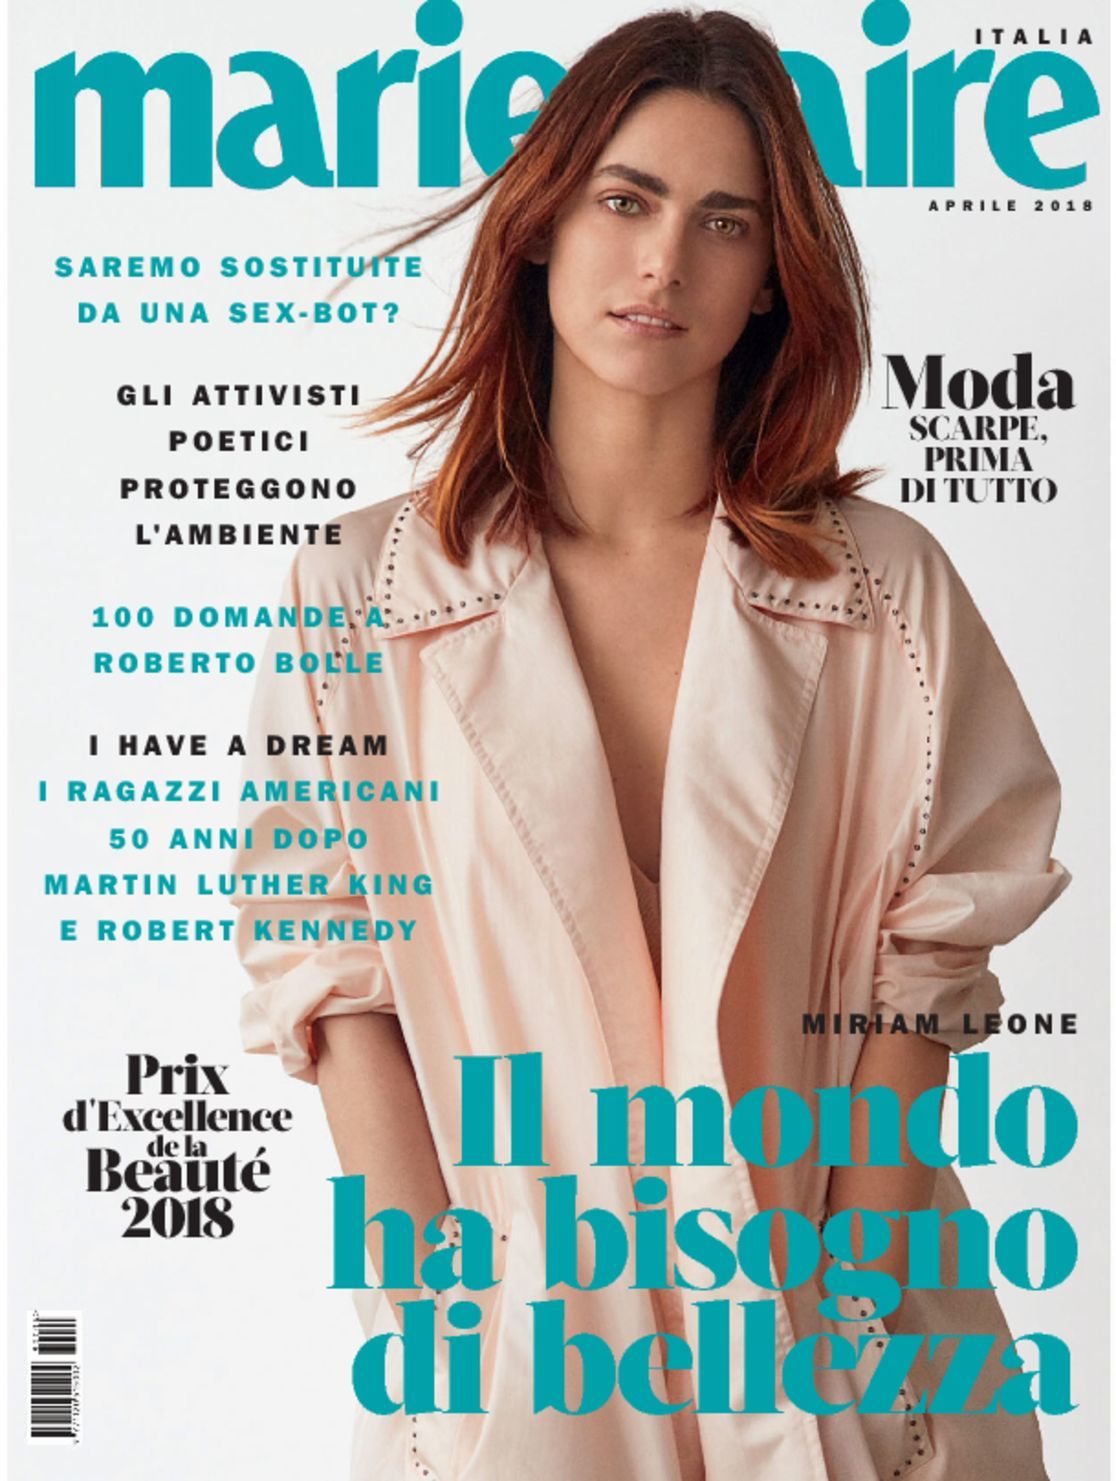 free digital italian magazines